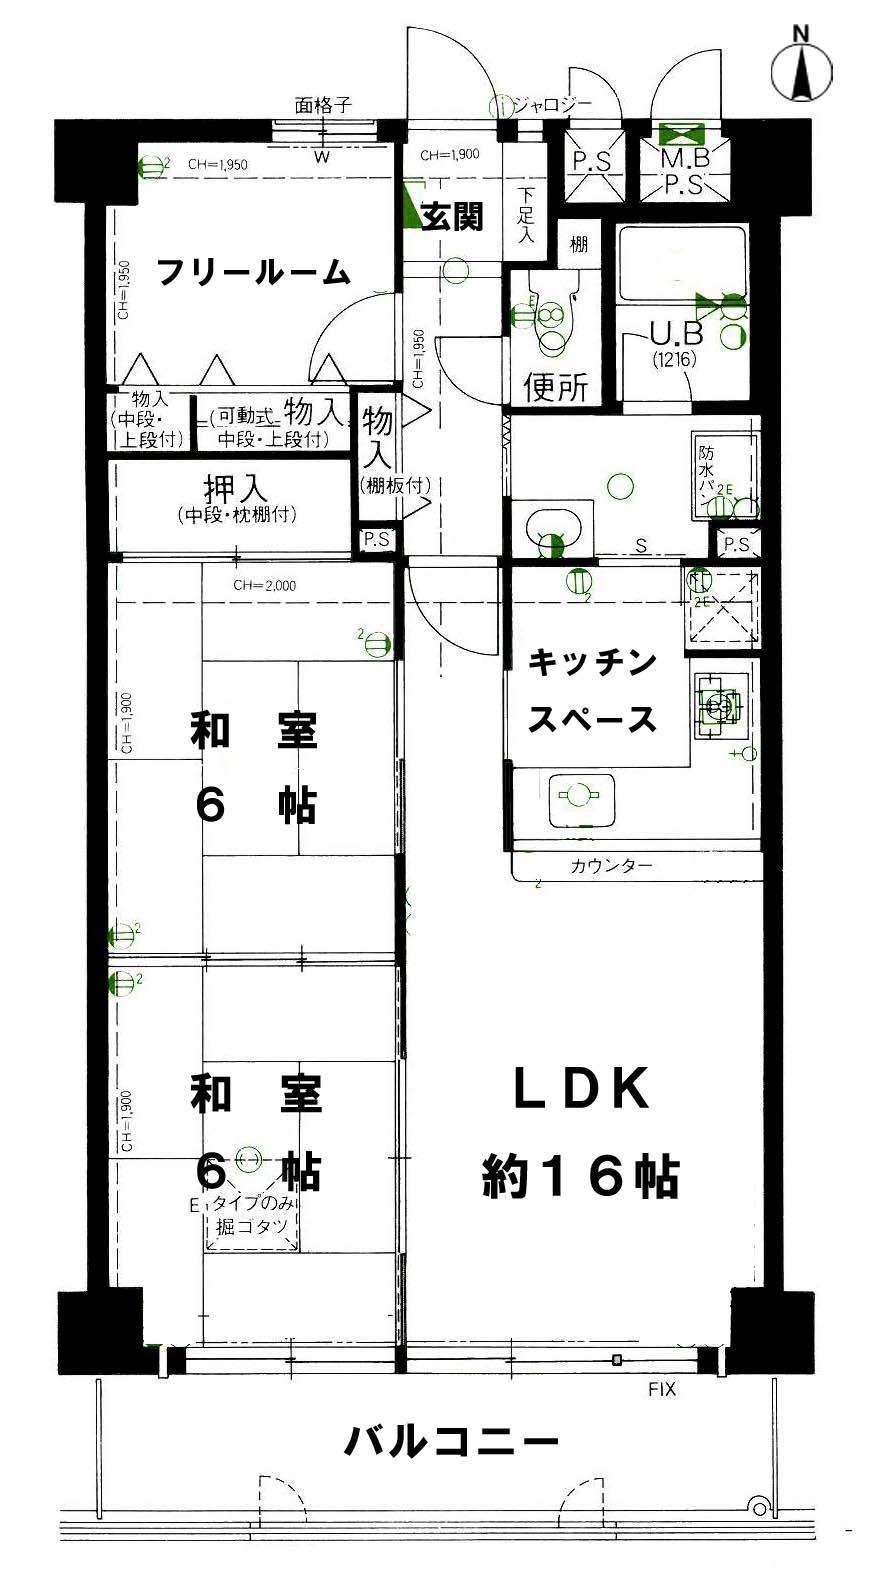 Floor plan. 2LDK + S (storeroom), Price 14.8 million yen, Footprint 66 sq m , Balcony area 9 sq m